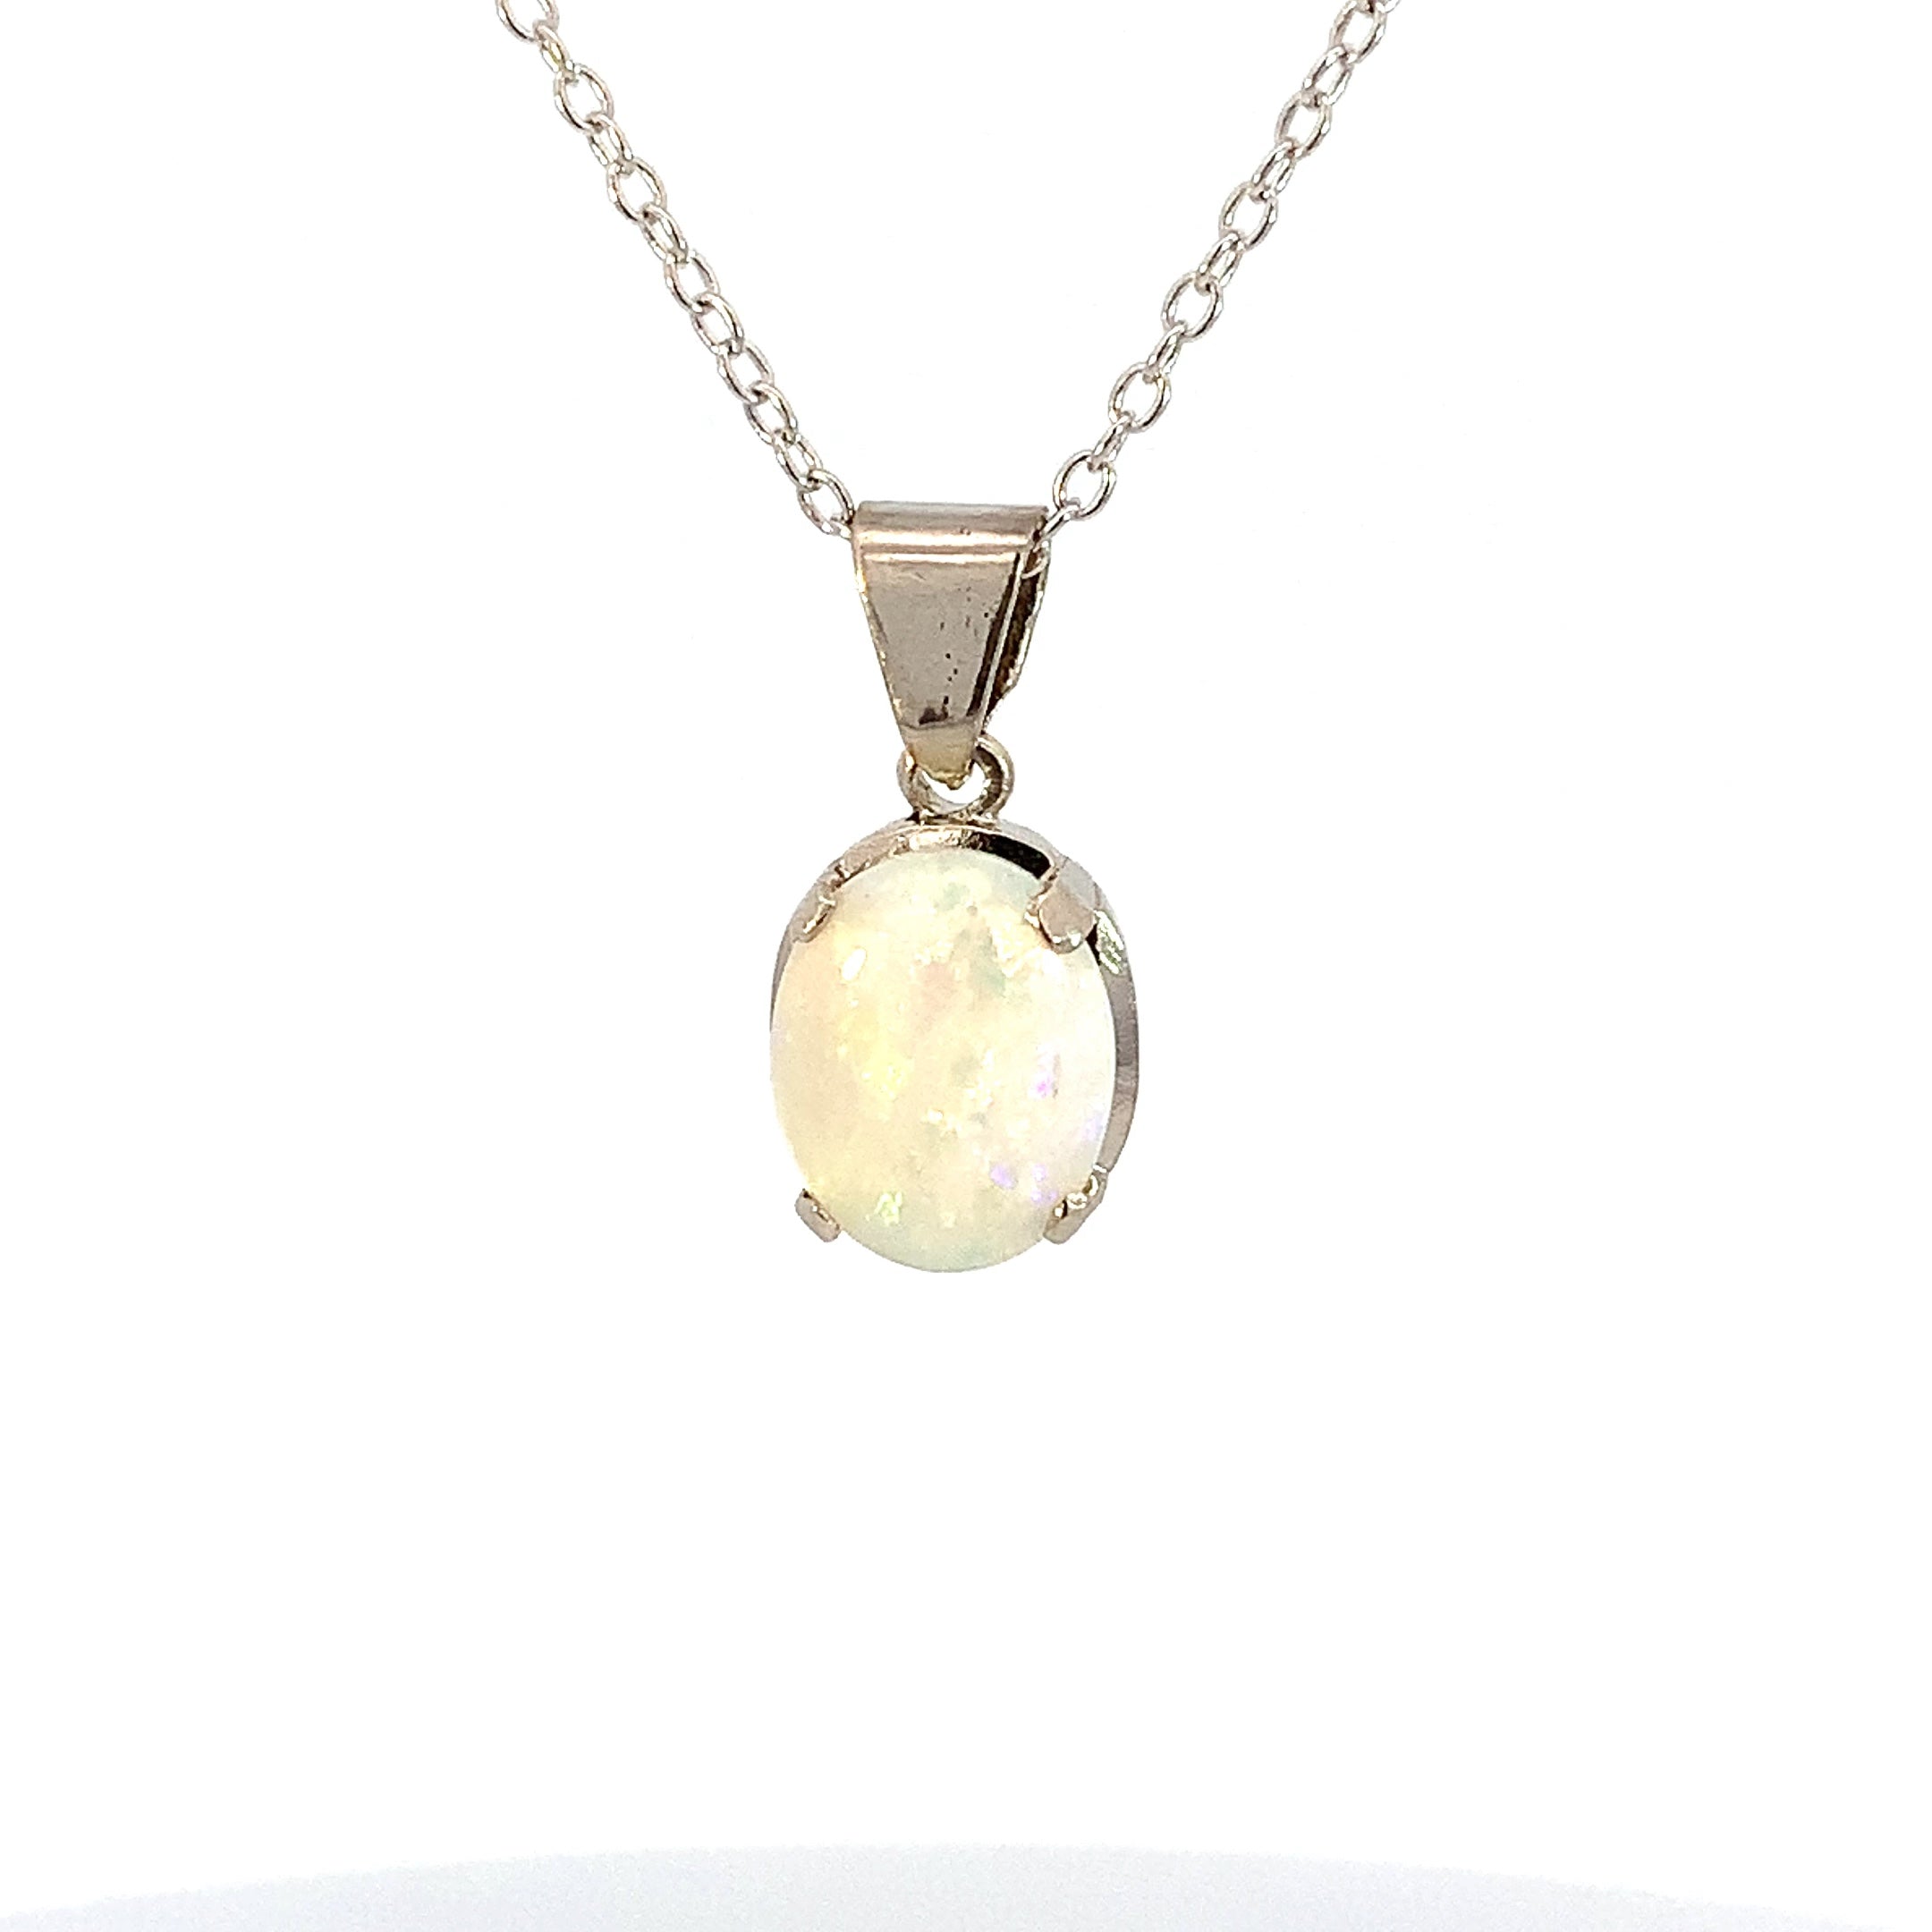 9kt White Gold claw set 9x7mm Crystal Opal pendant - Masterpiece Jewellery Opal & Gems Sydney Australia | Online Shop